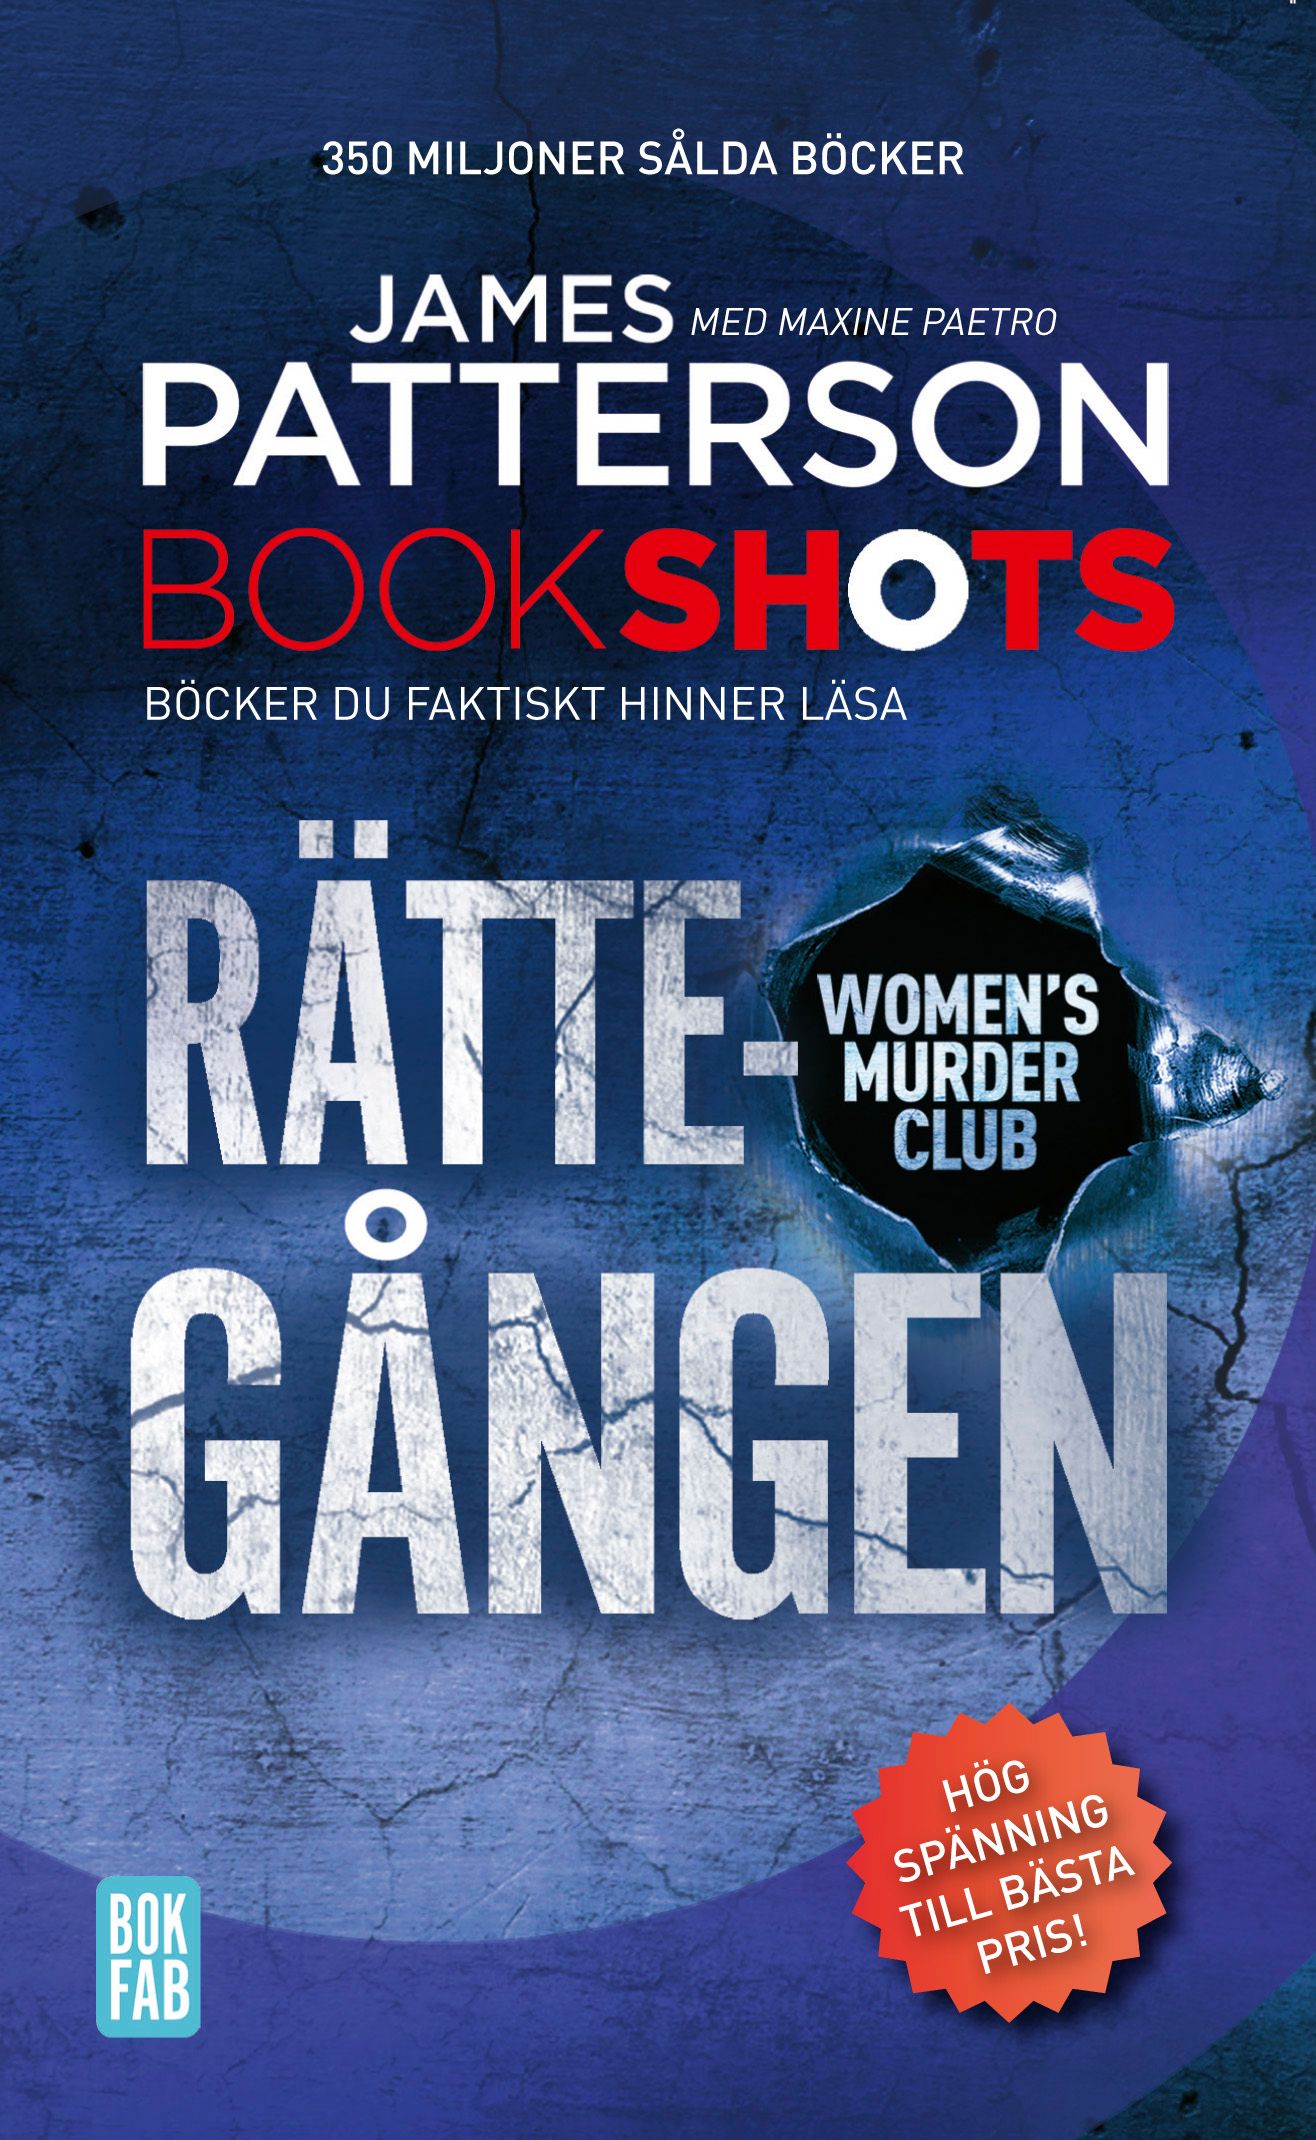 Bookshots: Rättegången - Women's murder club, eBook by Maxine Paetro, James Patterson